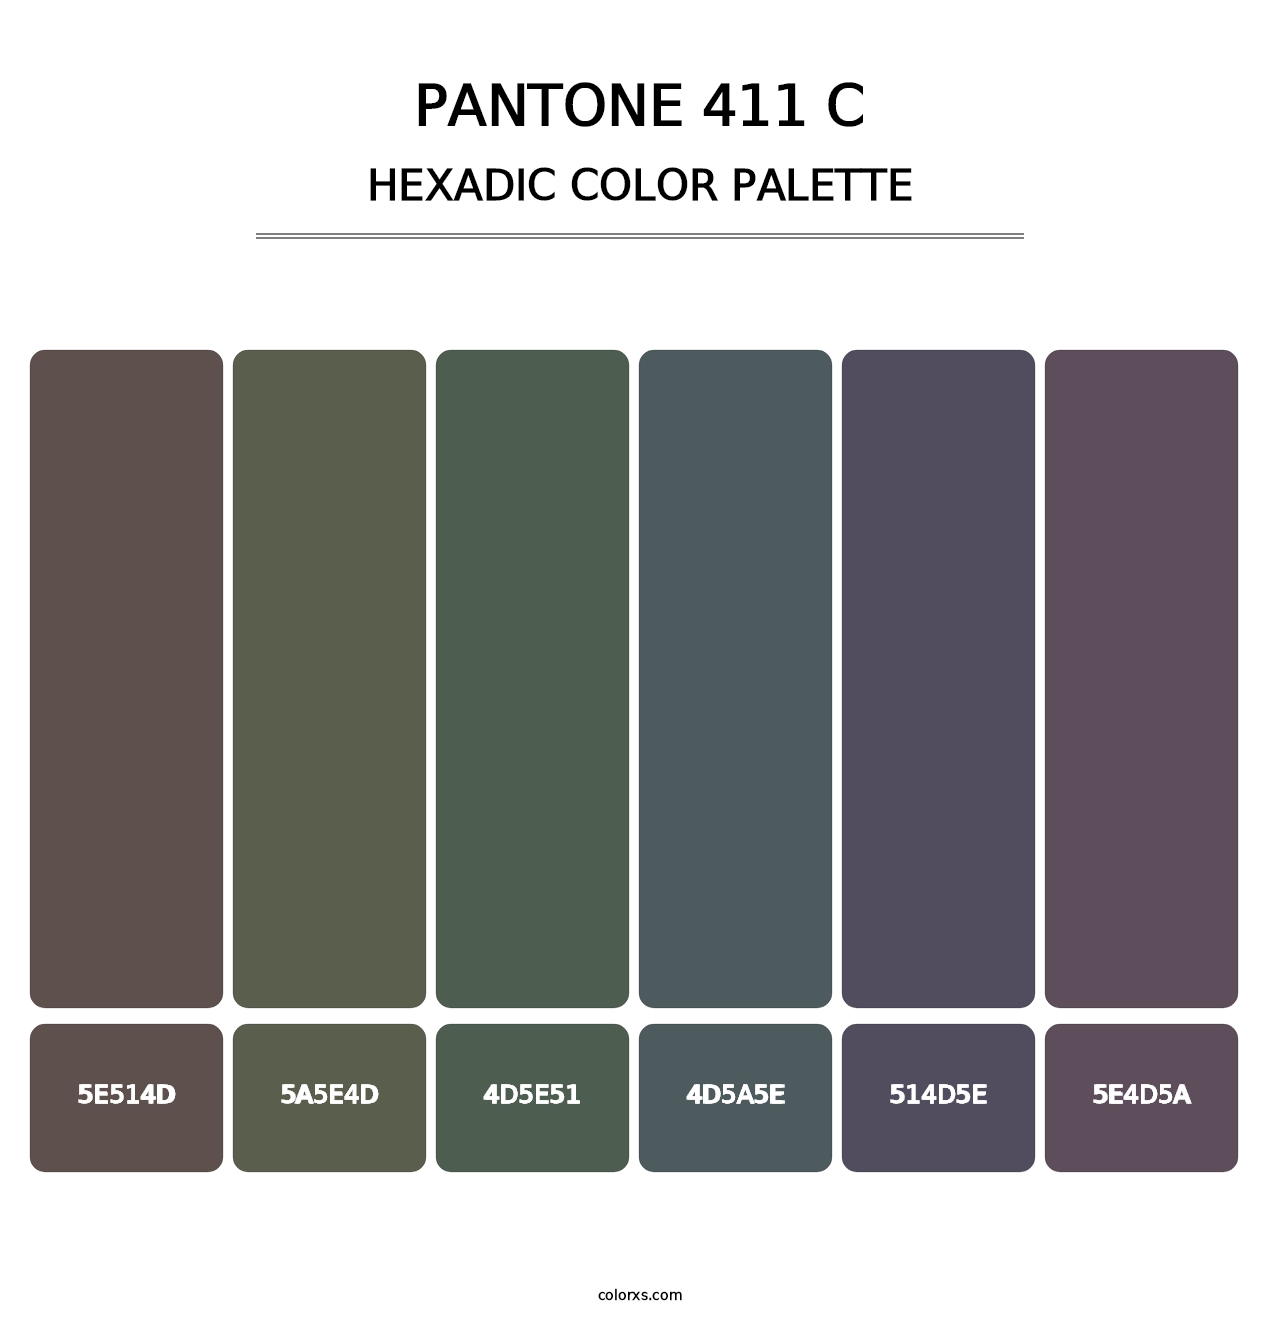 PANTONE 411 C - Hexadic Color Palette